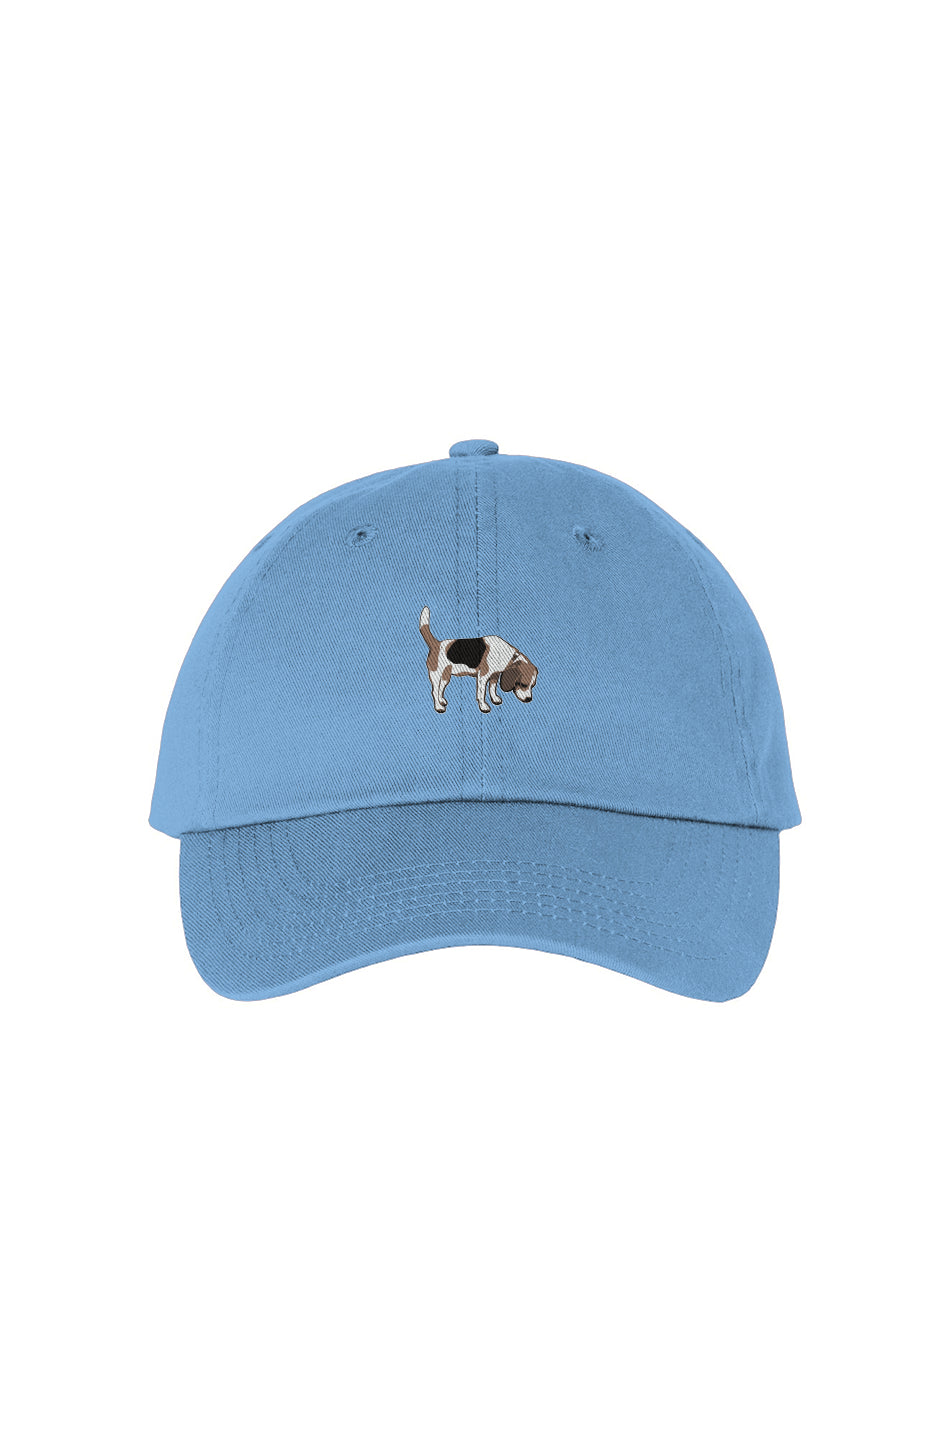 Embroidered Ball Cap - Beagle - Light Blue